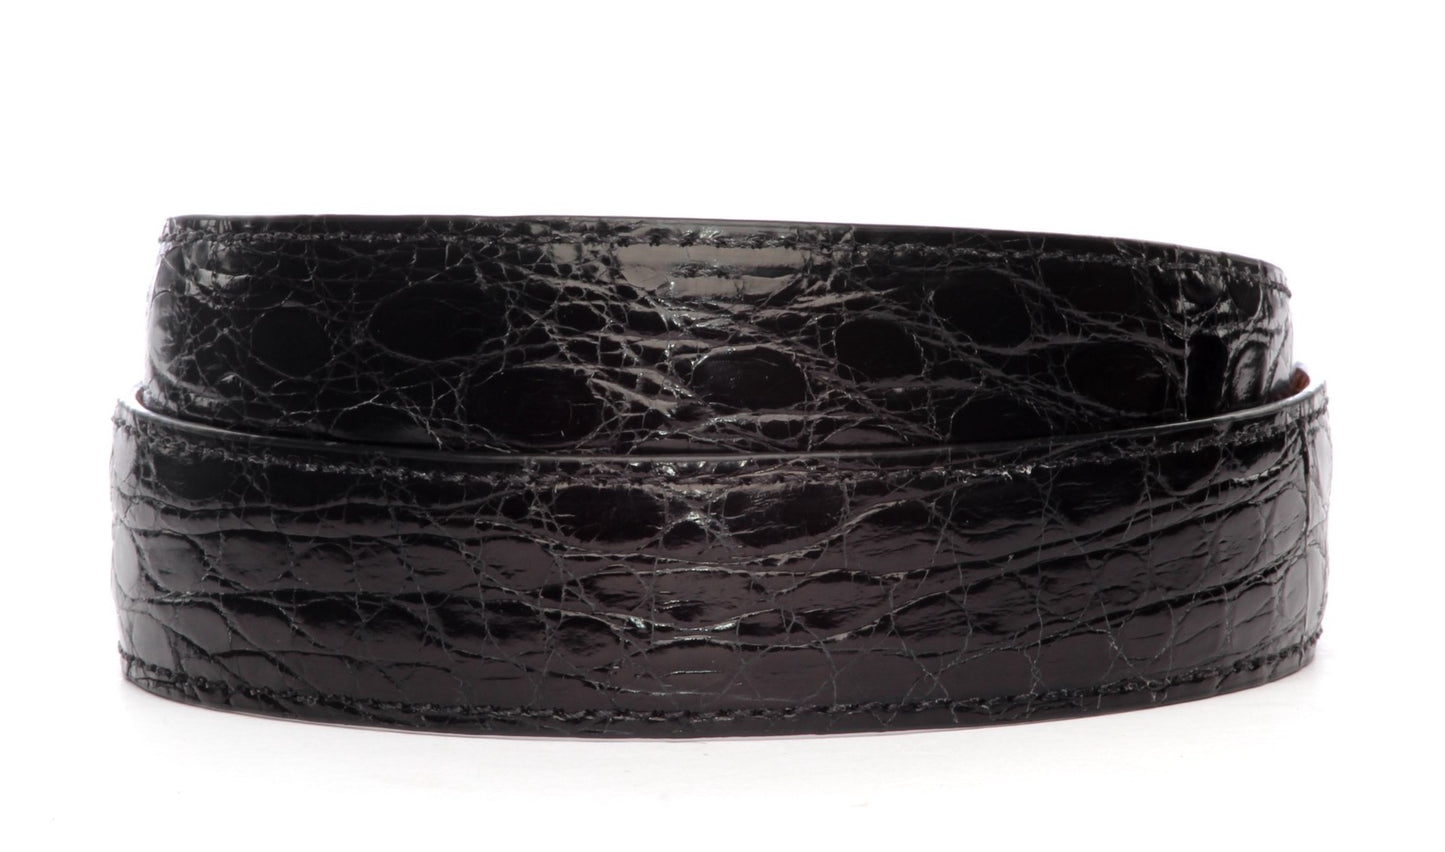 Men's crocodile belt strap in black, 1.5 inches wide, formal look